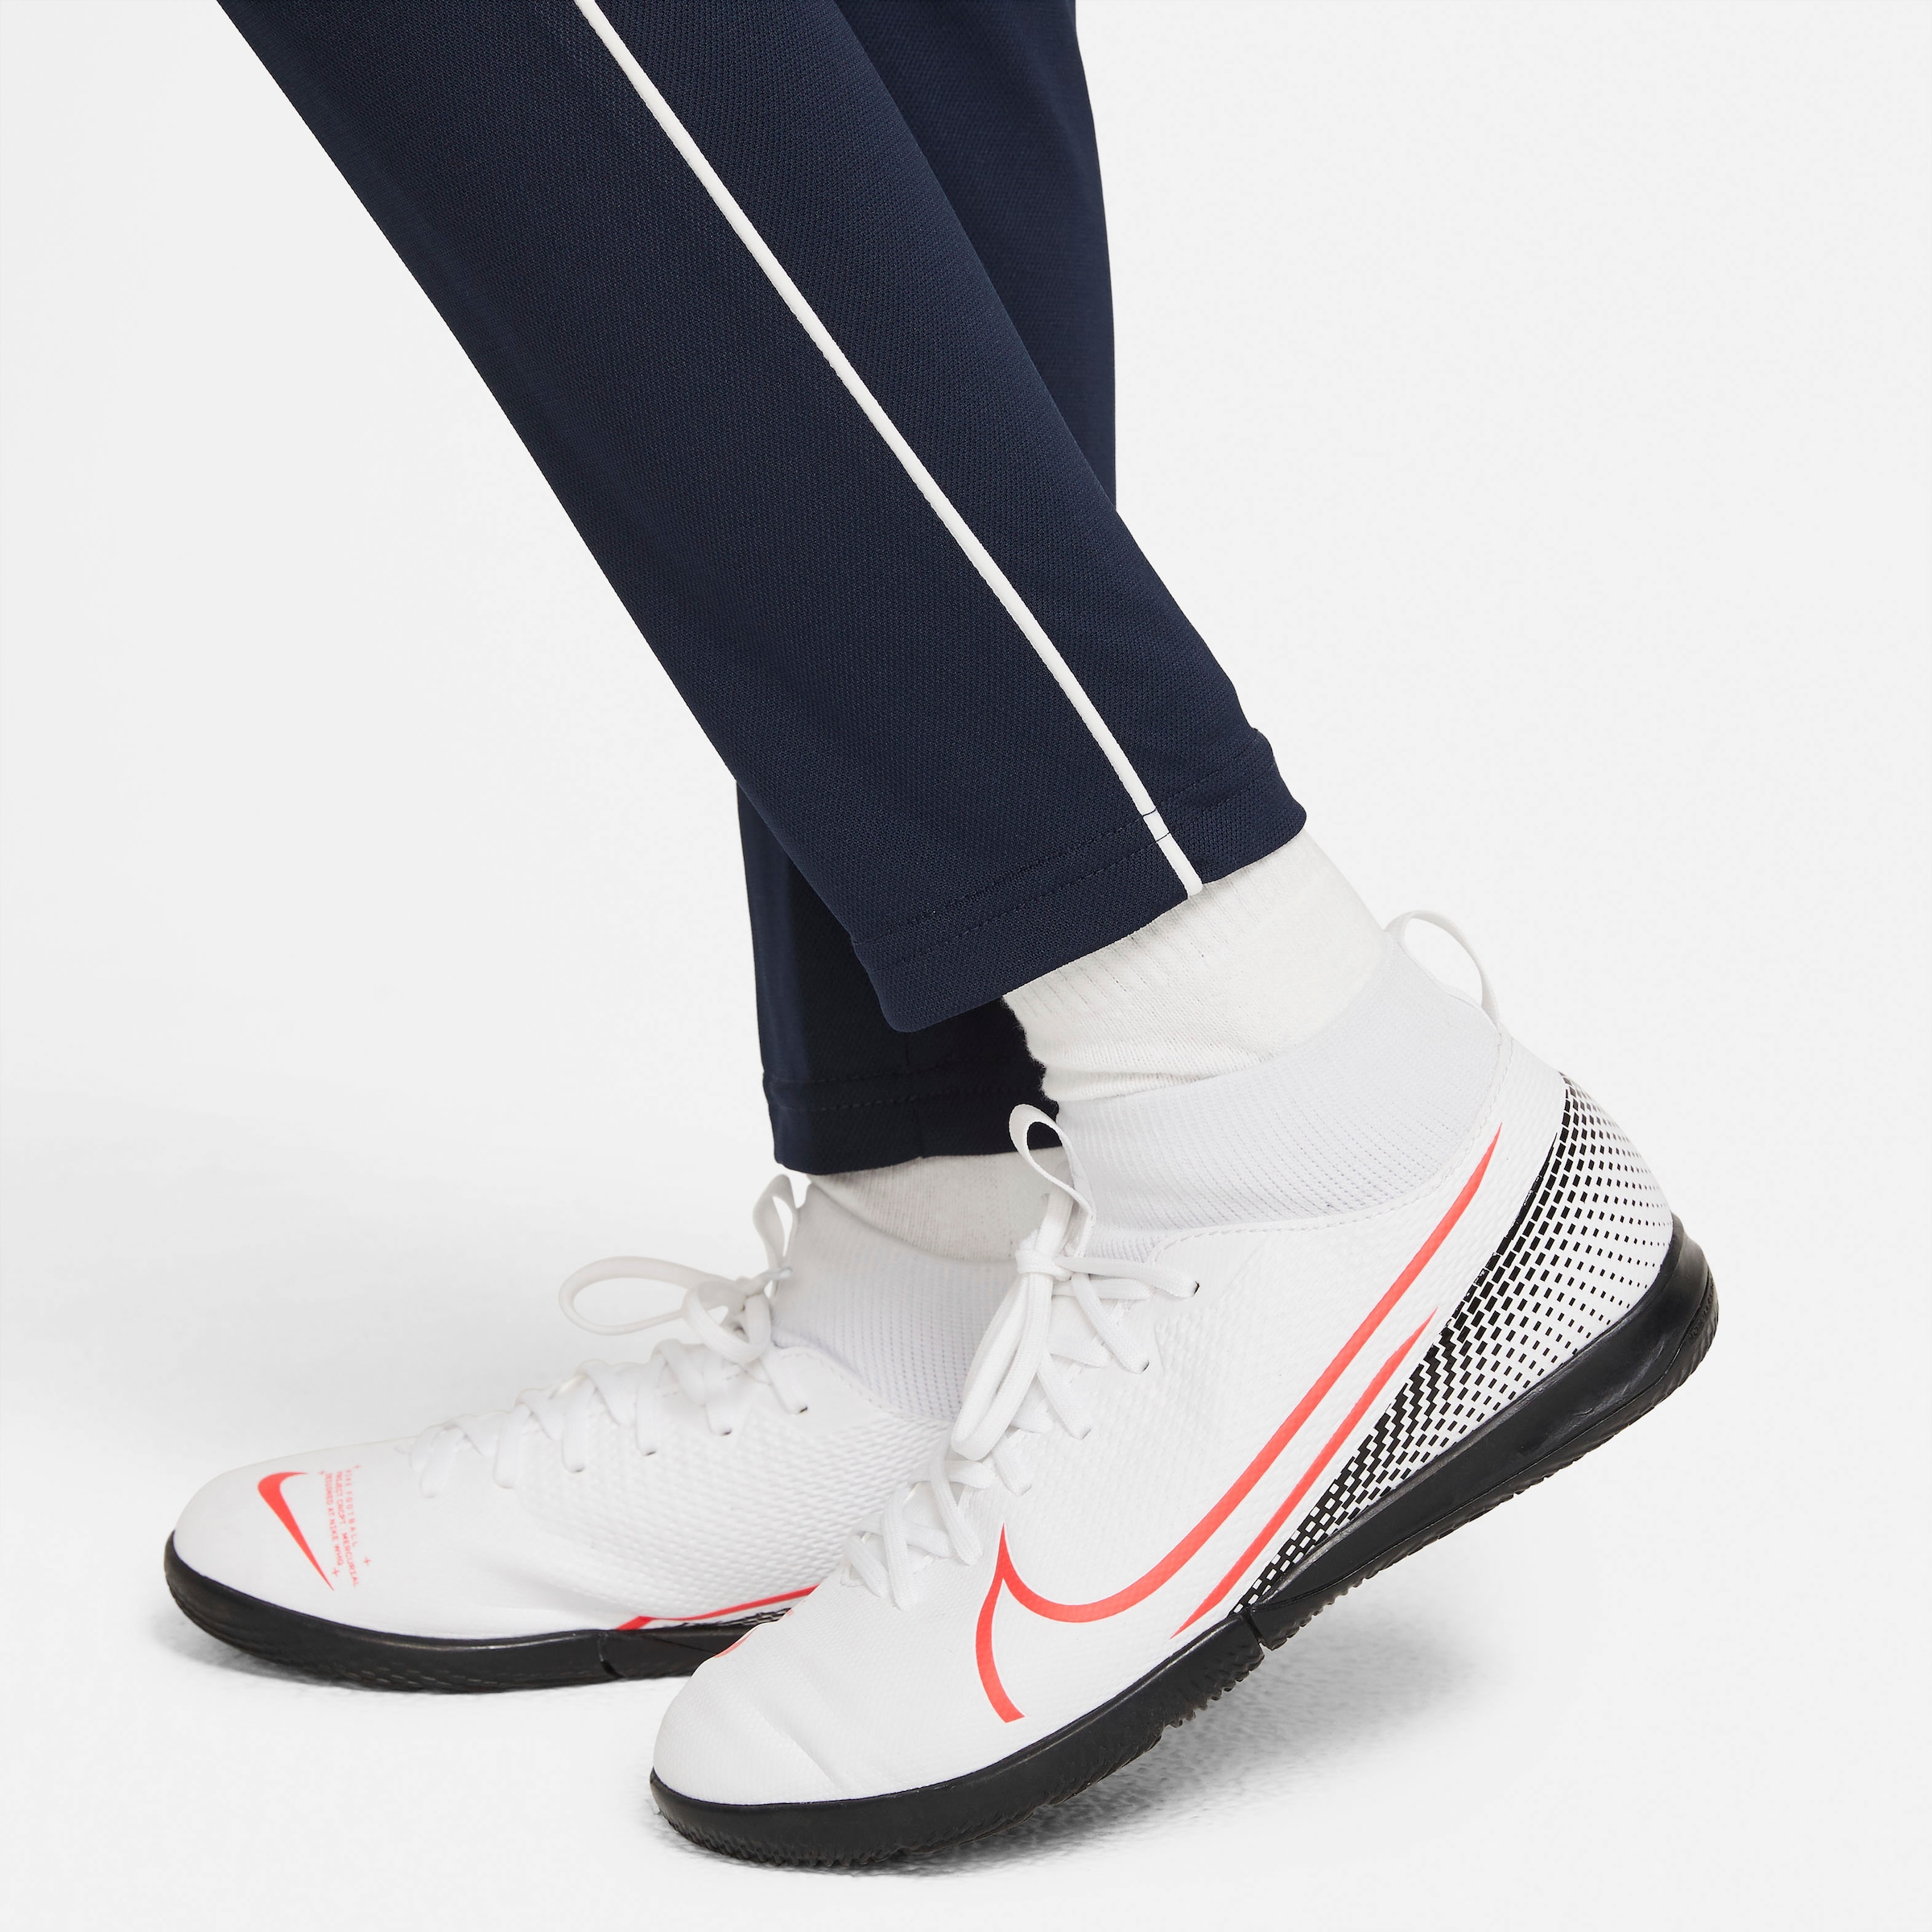 Nike Trainingsanzug »DRI-FIT ACADEMY BIG KIDS KNIT SOCCER«